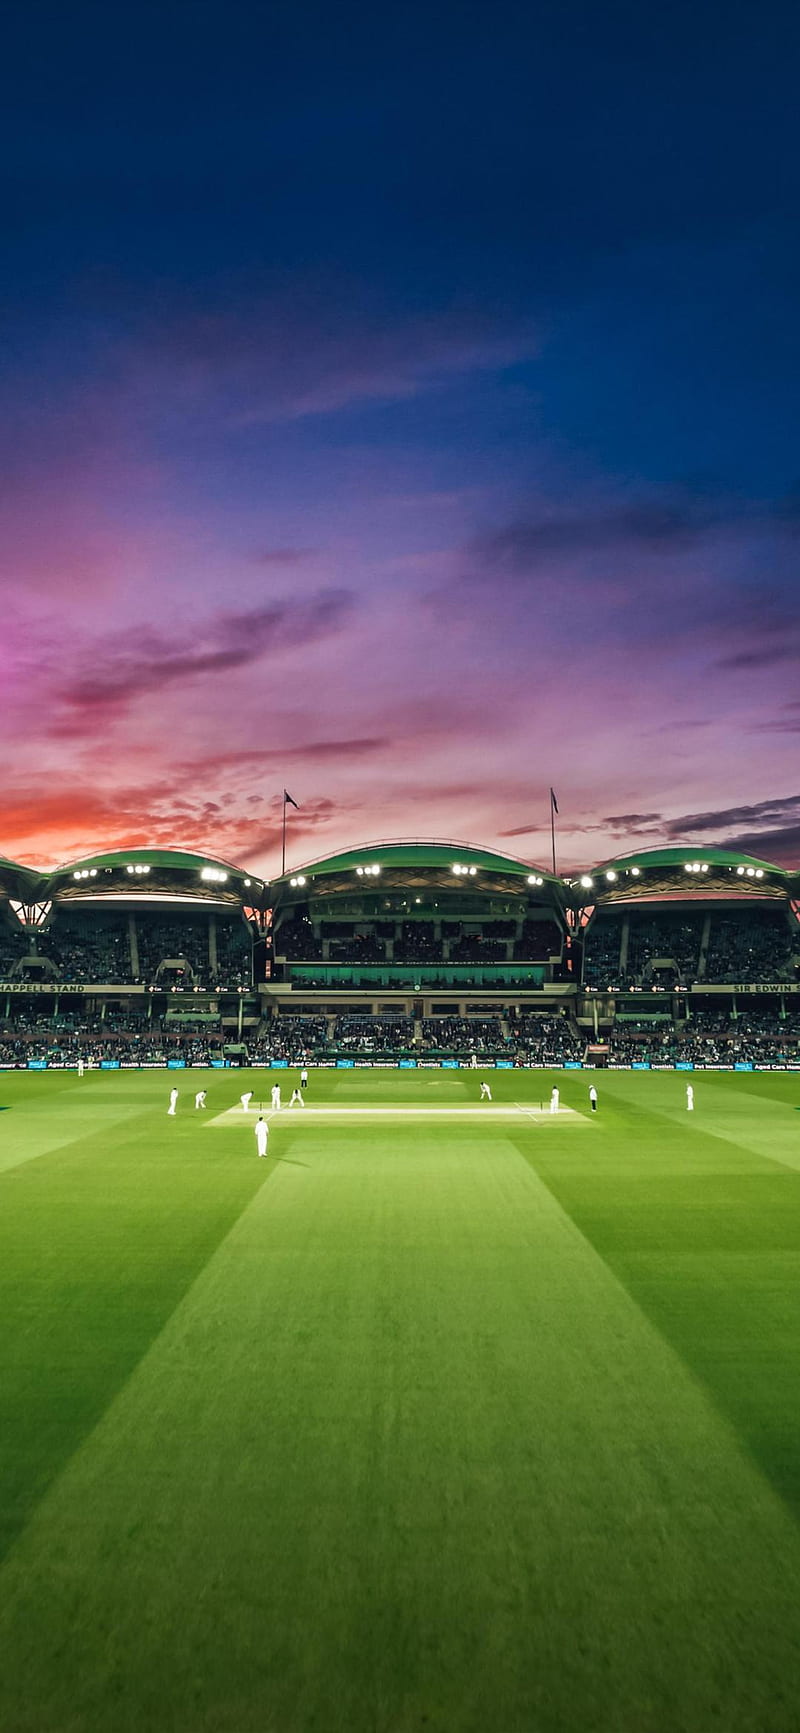 Cricket stadium, icc, storm, HD phone wallpaper